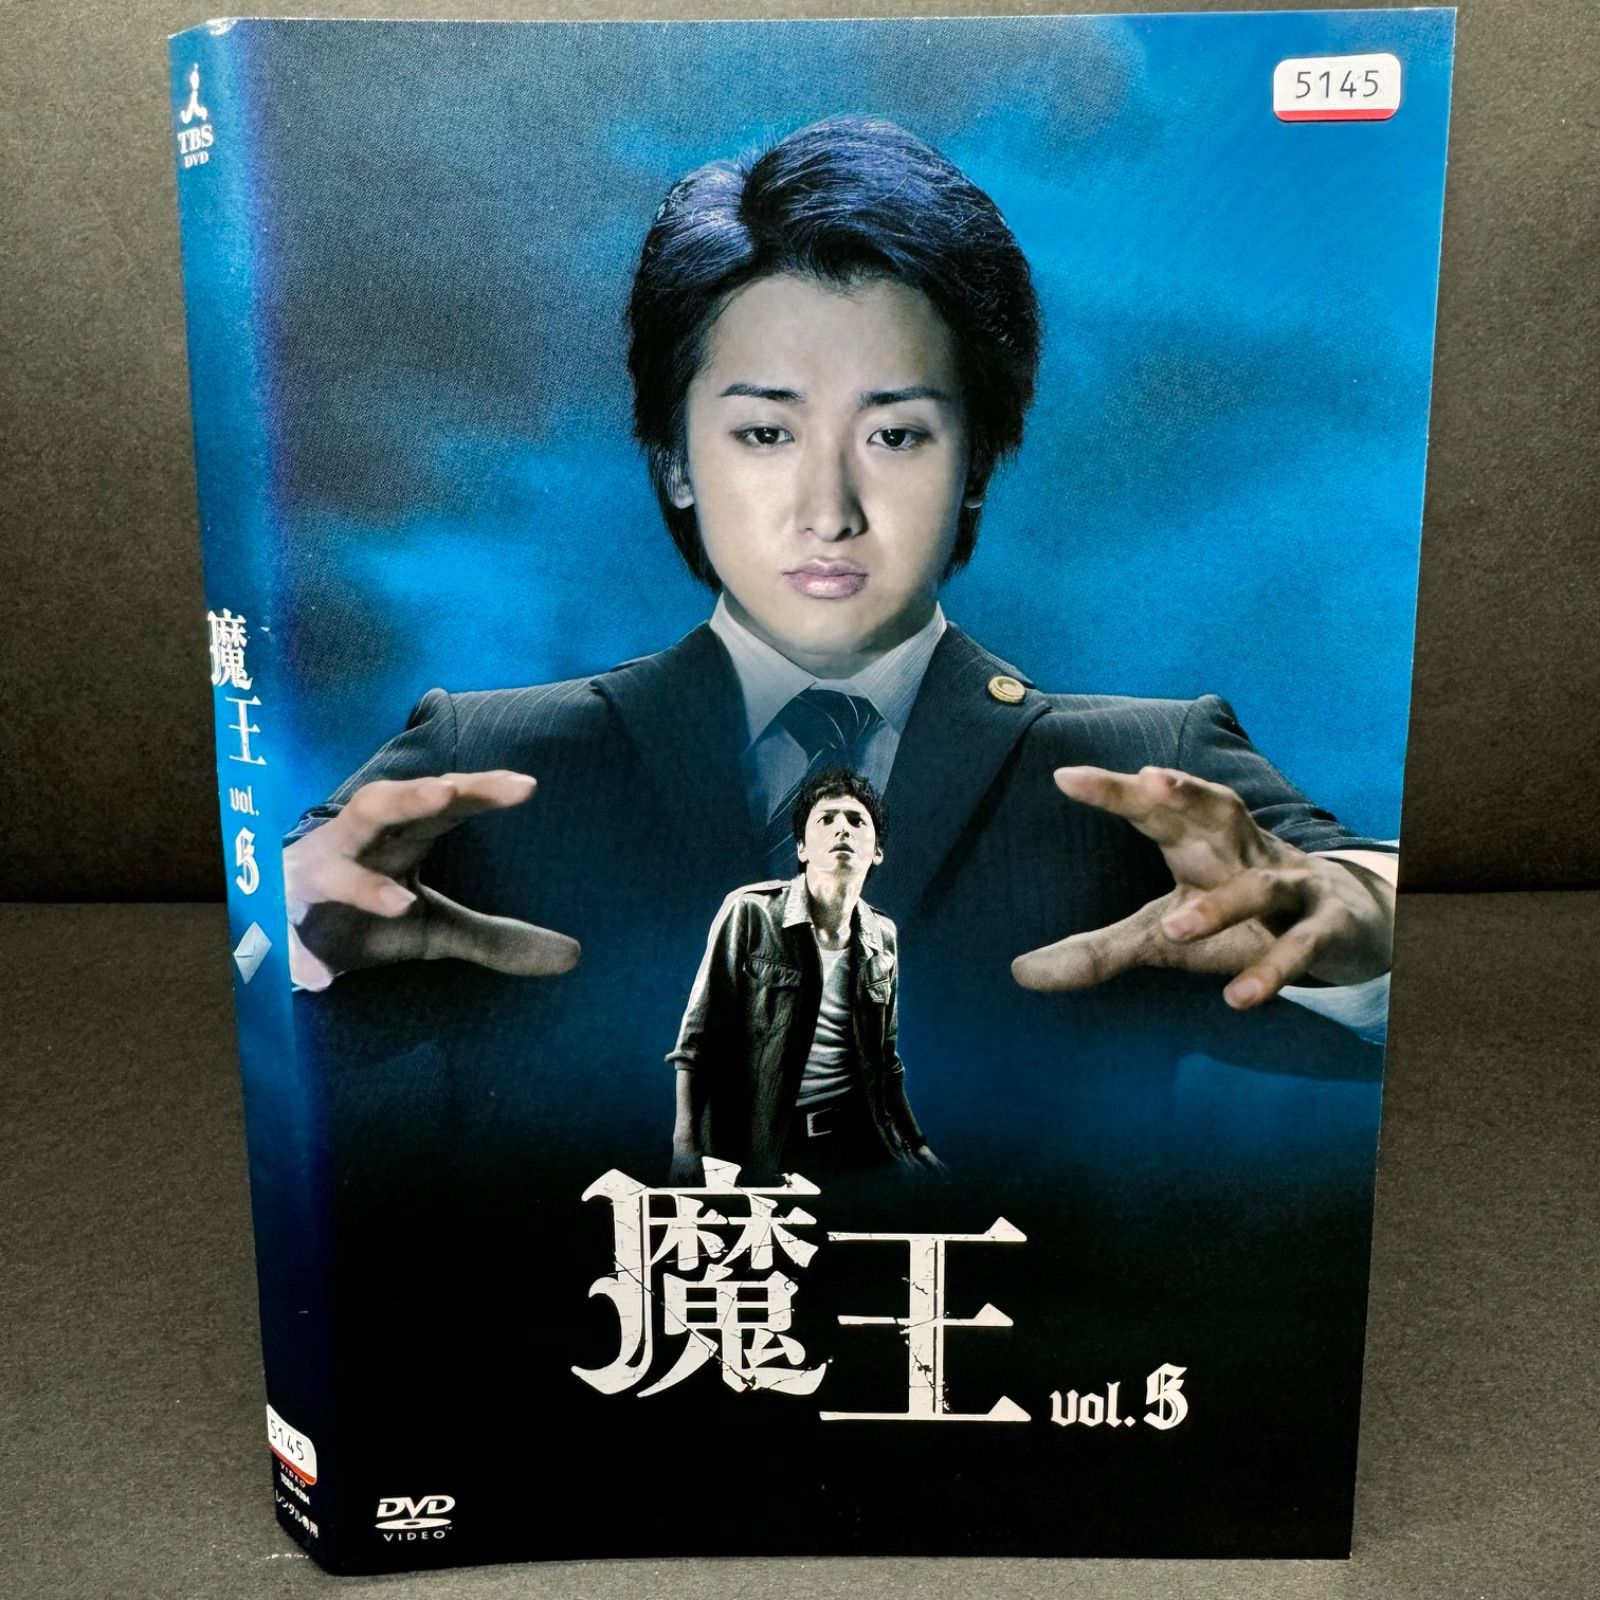 DVD 魔王 大野智・国内ドラマ - DVD